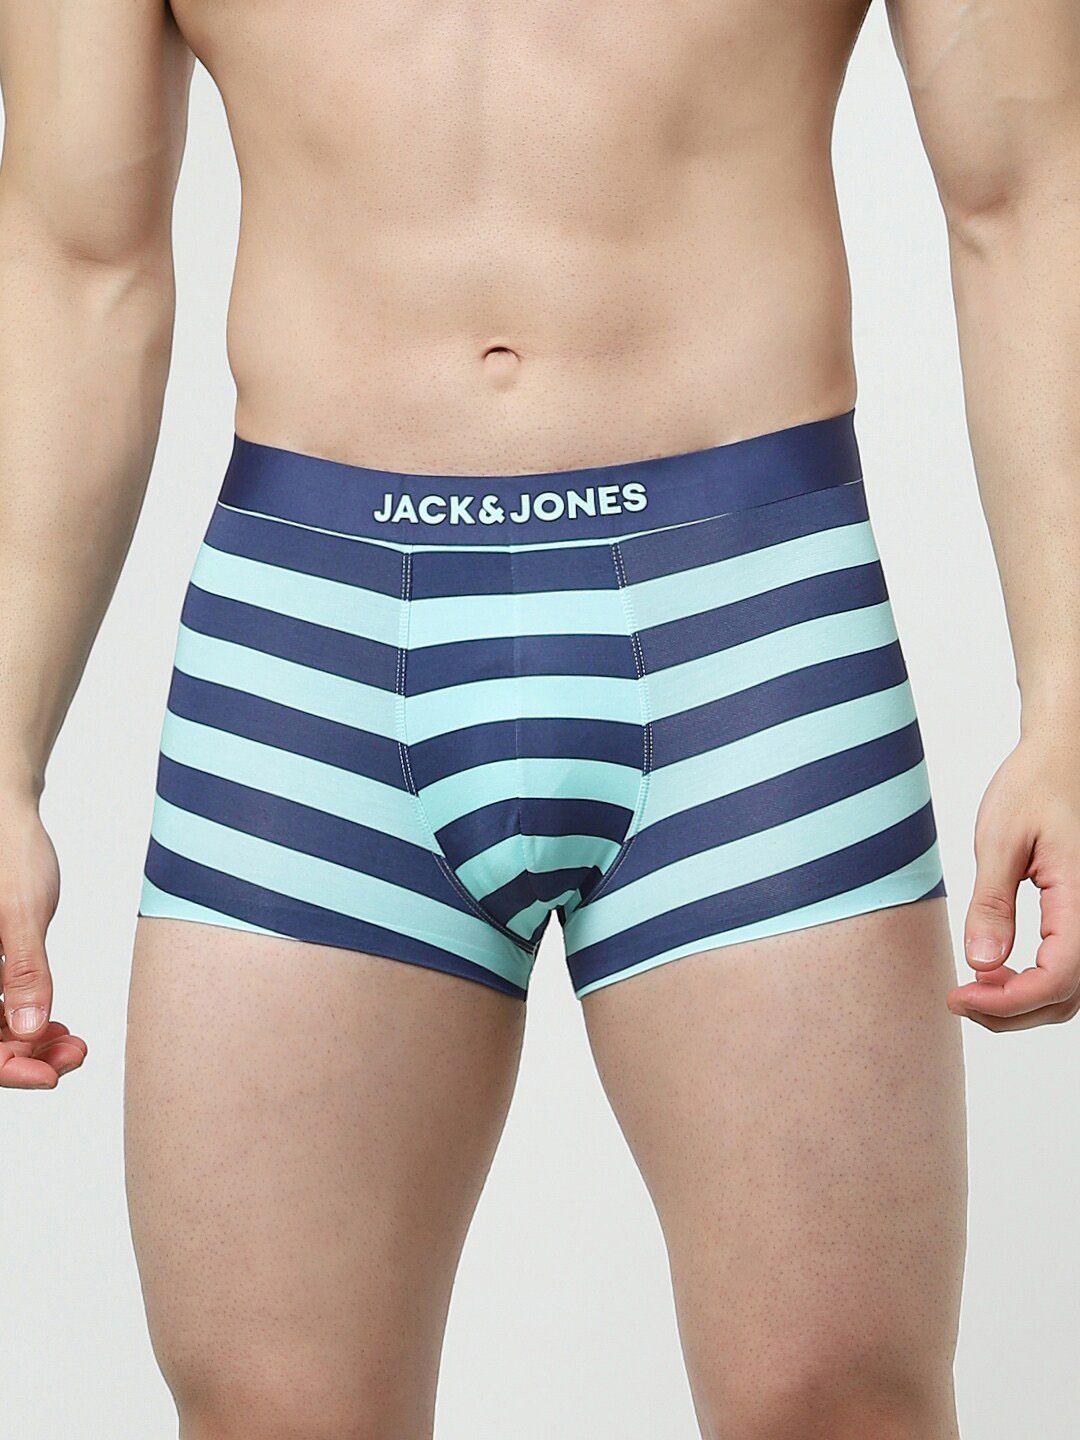 jack-&-jones-men-mid-rise-striped-trunks-1310050001